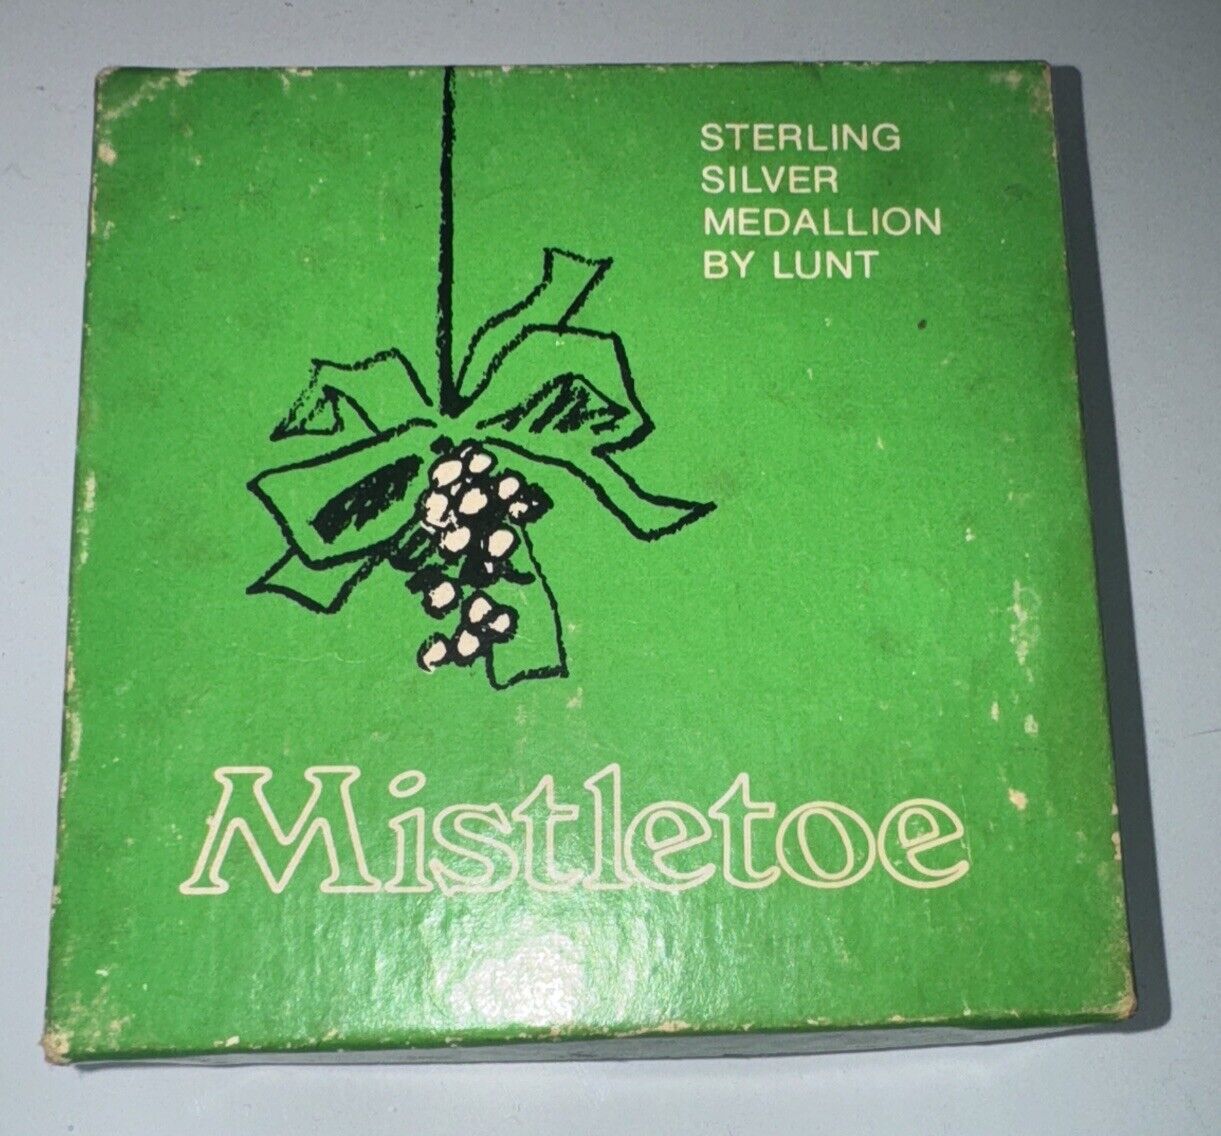 Lunt 1976 -Sterling Mistletoe Medallion Original Box